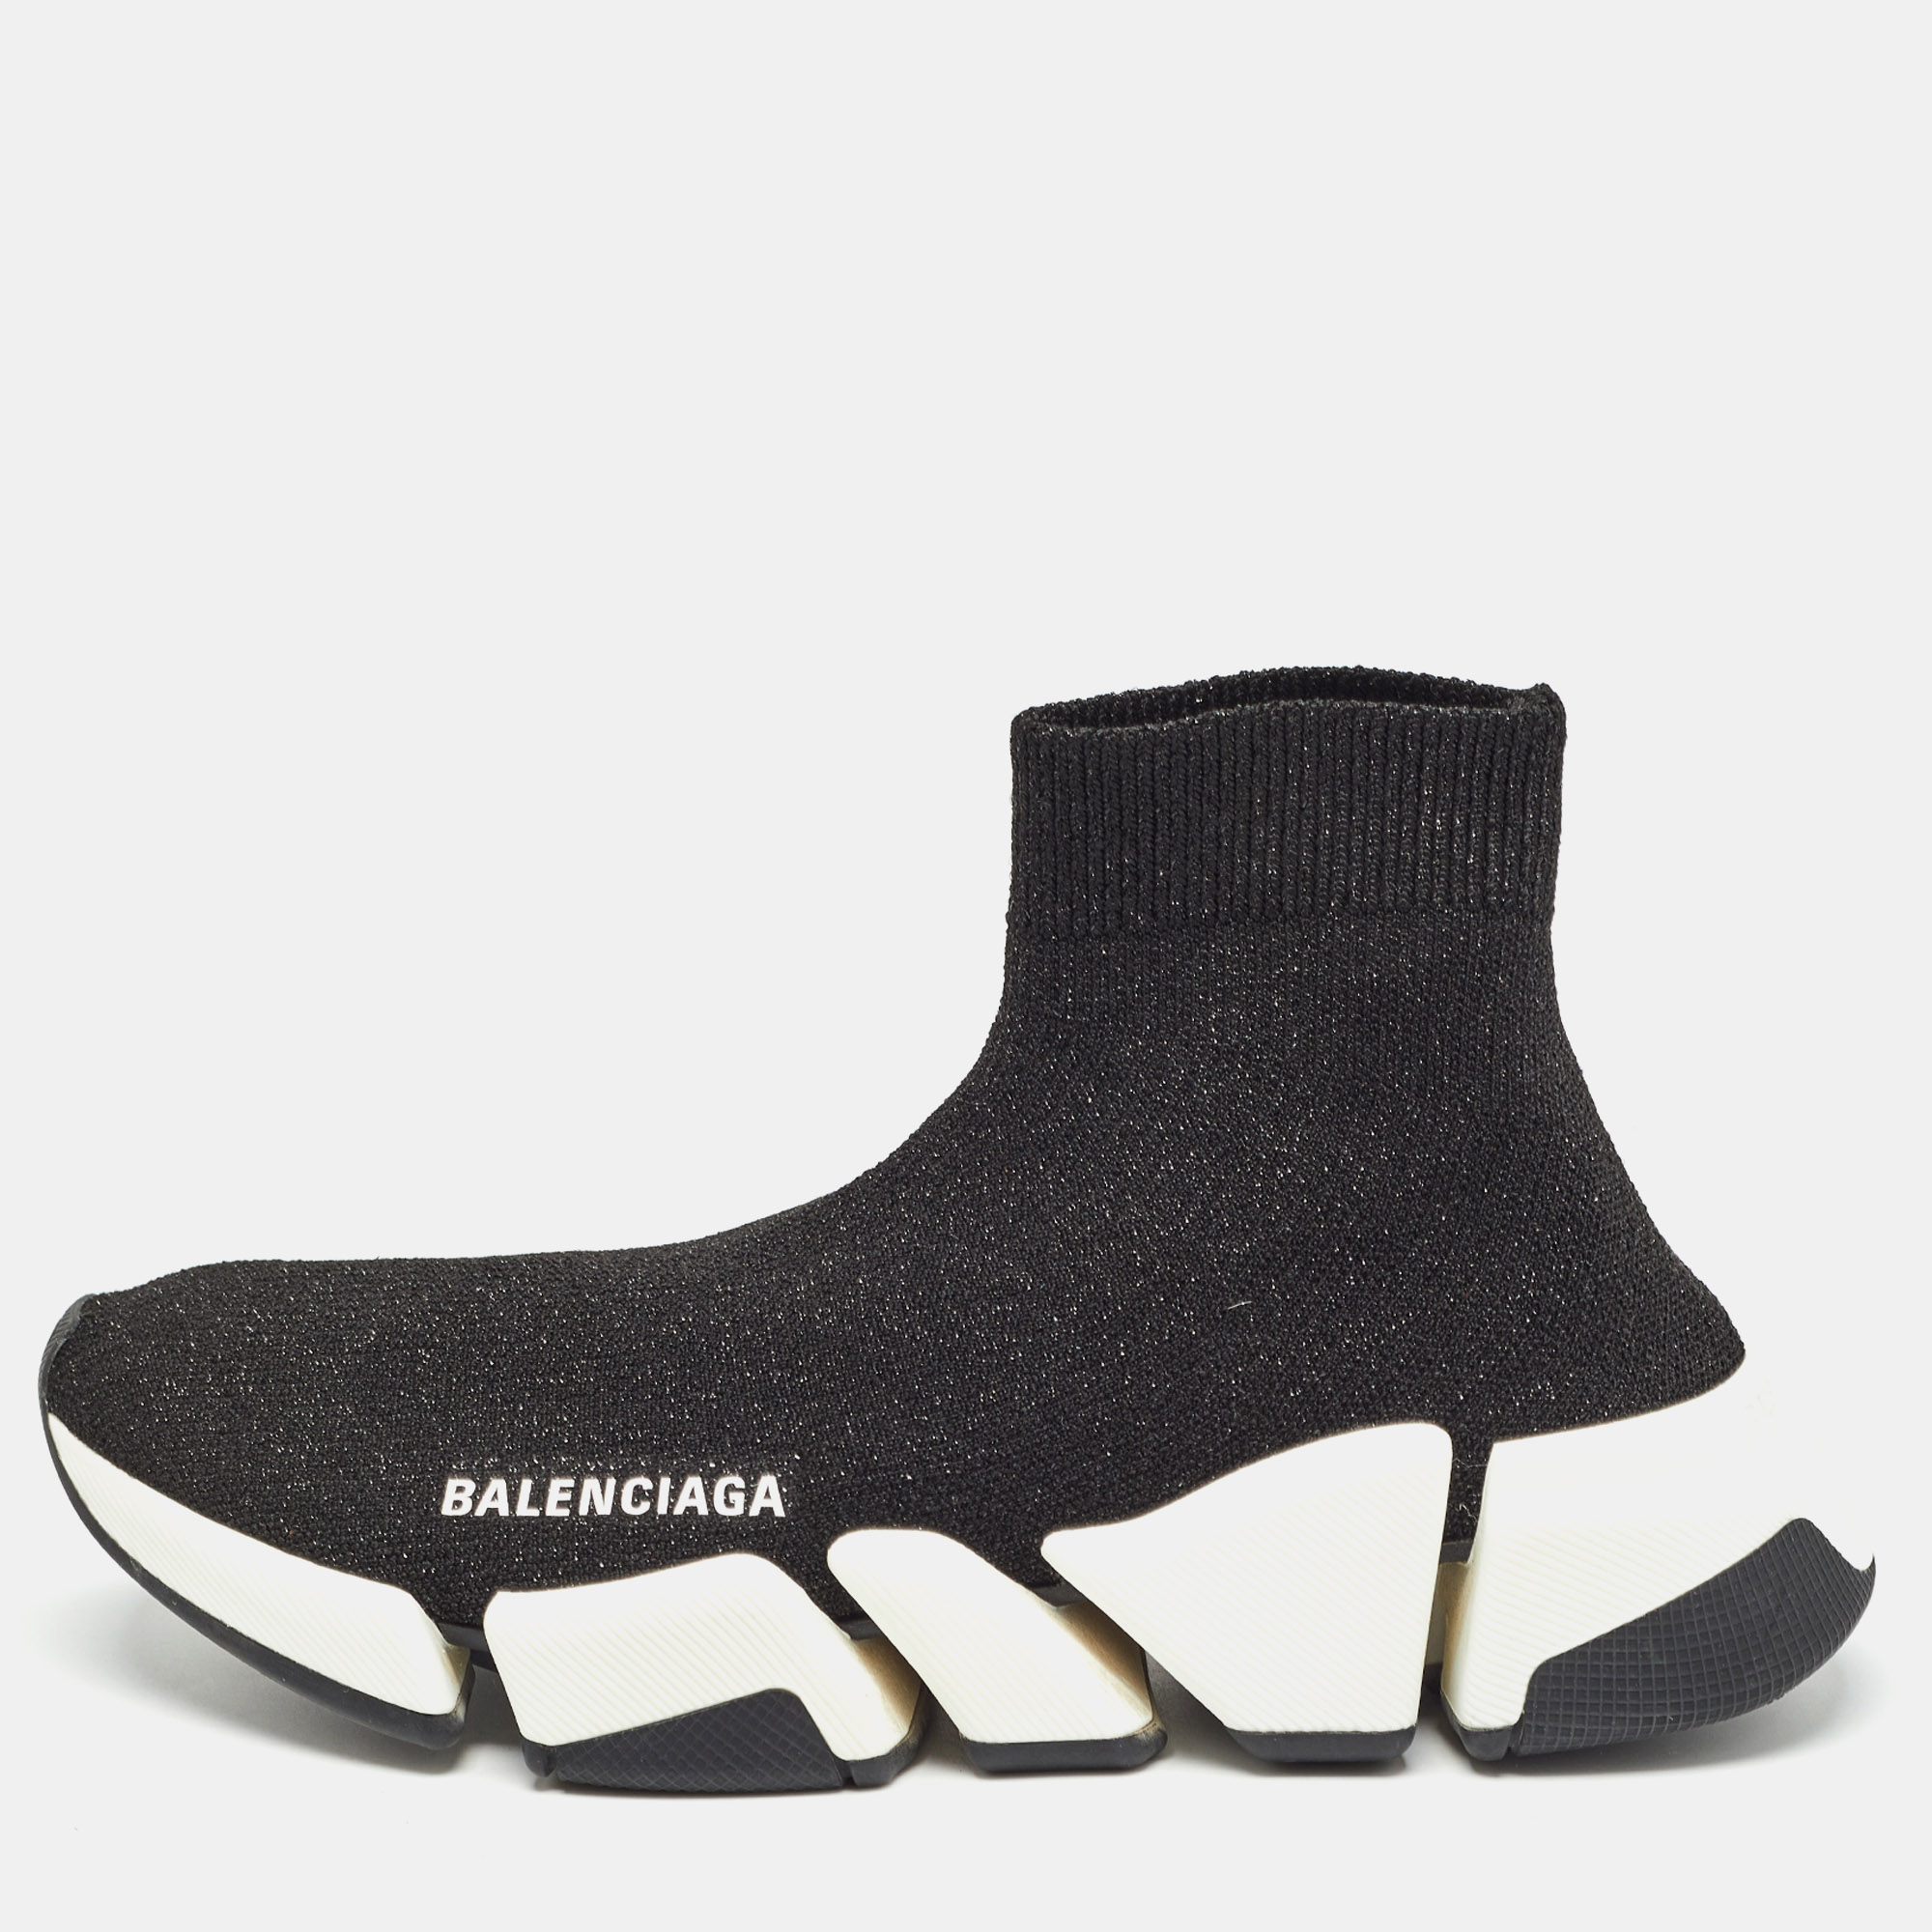 Balenciaga black glitter knit fabric speed trainer sneakers size 37